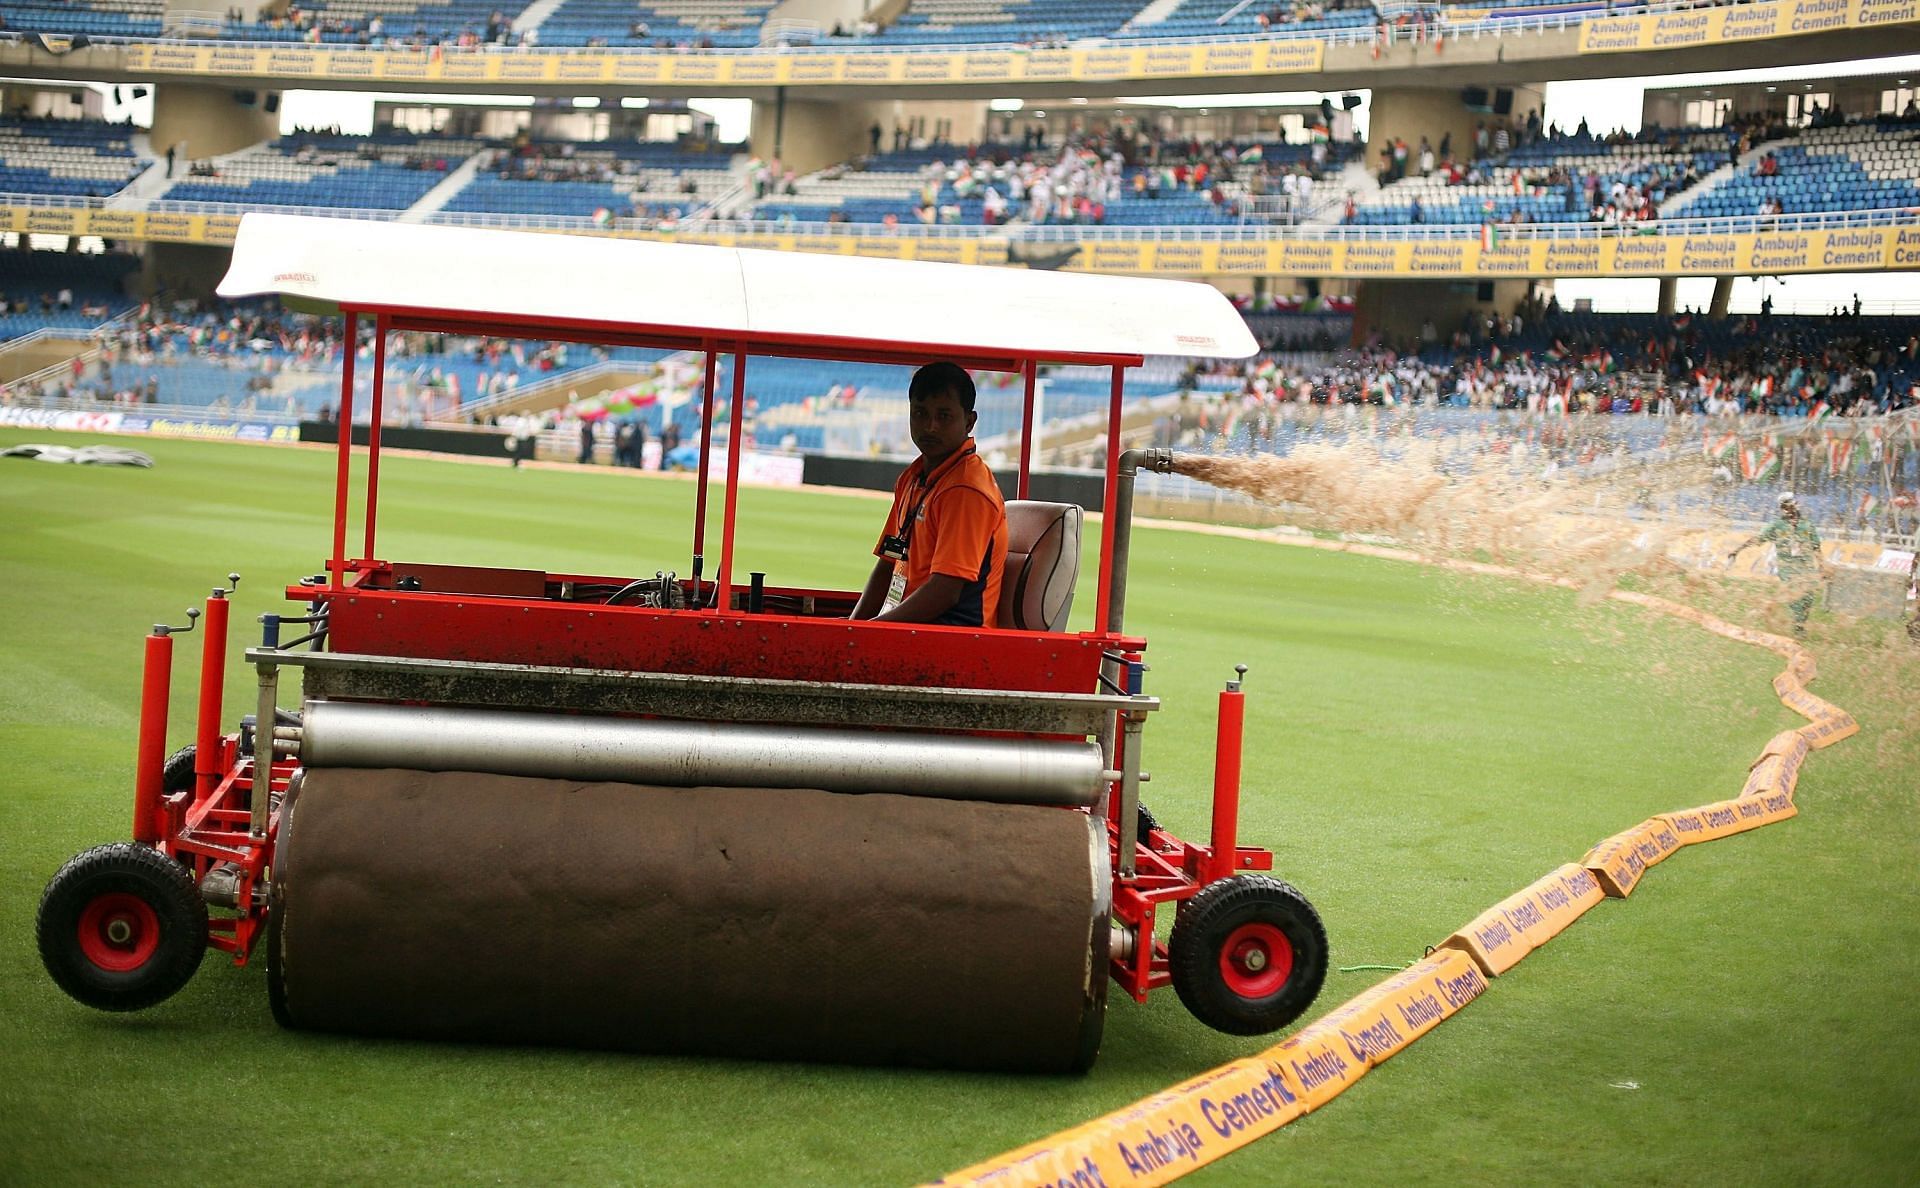 DY Patil Stadium, Mumbai will host 20 games in IPL 2022.